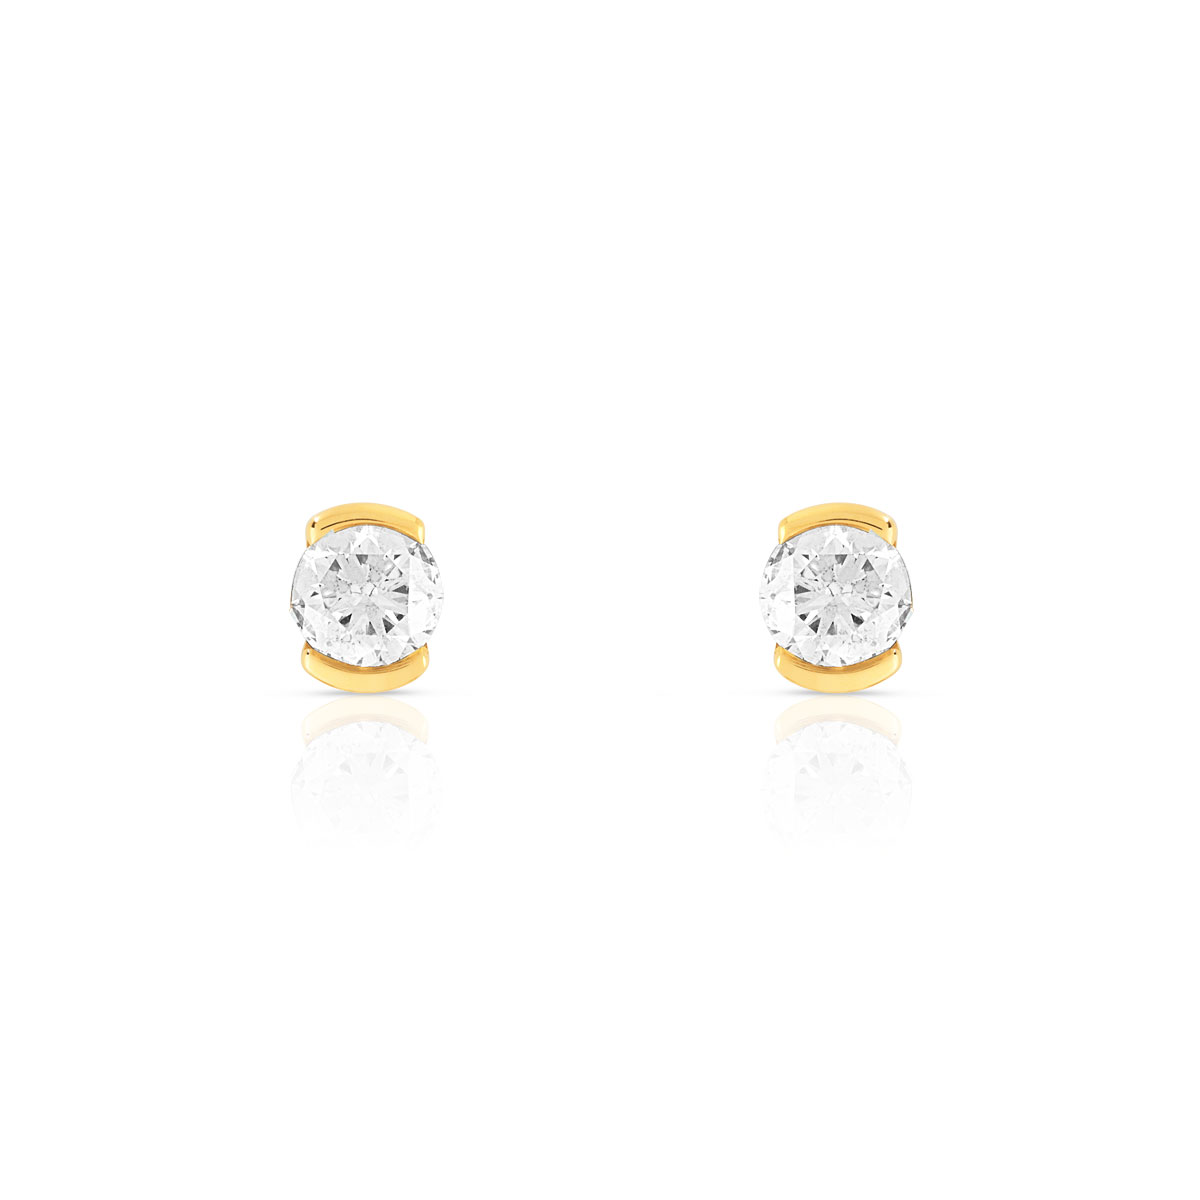 Boucles d'oreilles or jaune 750 diamant 0.40 carat h/p1